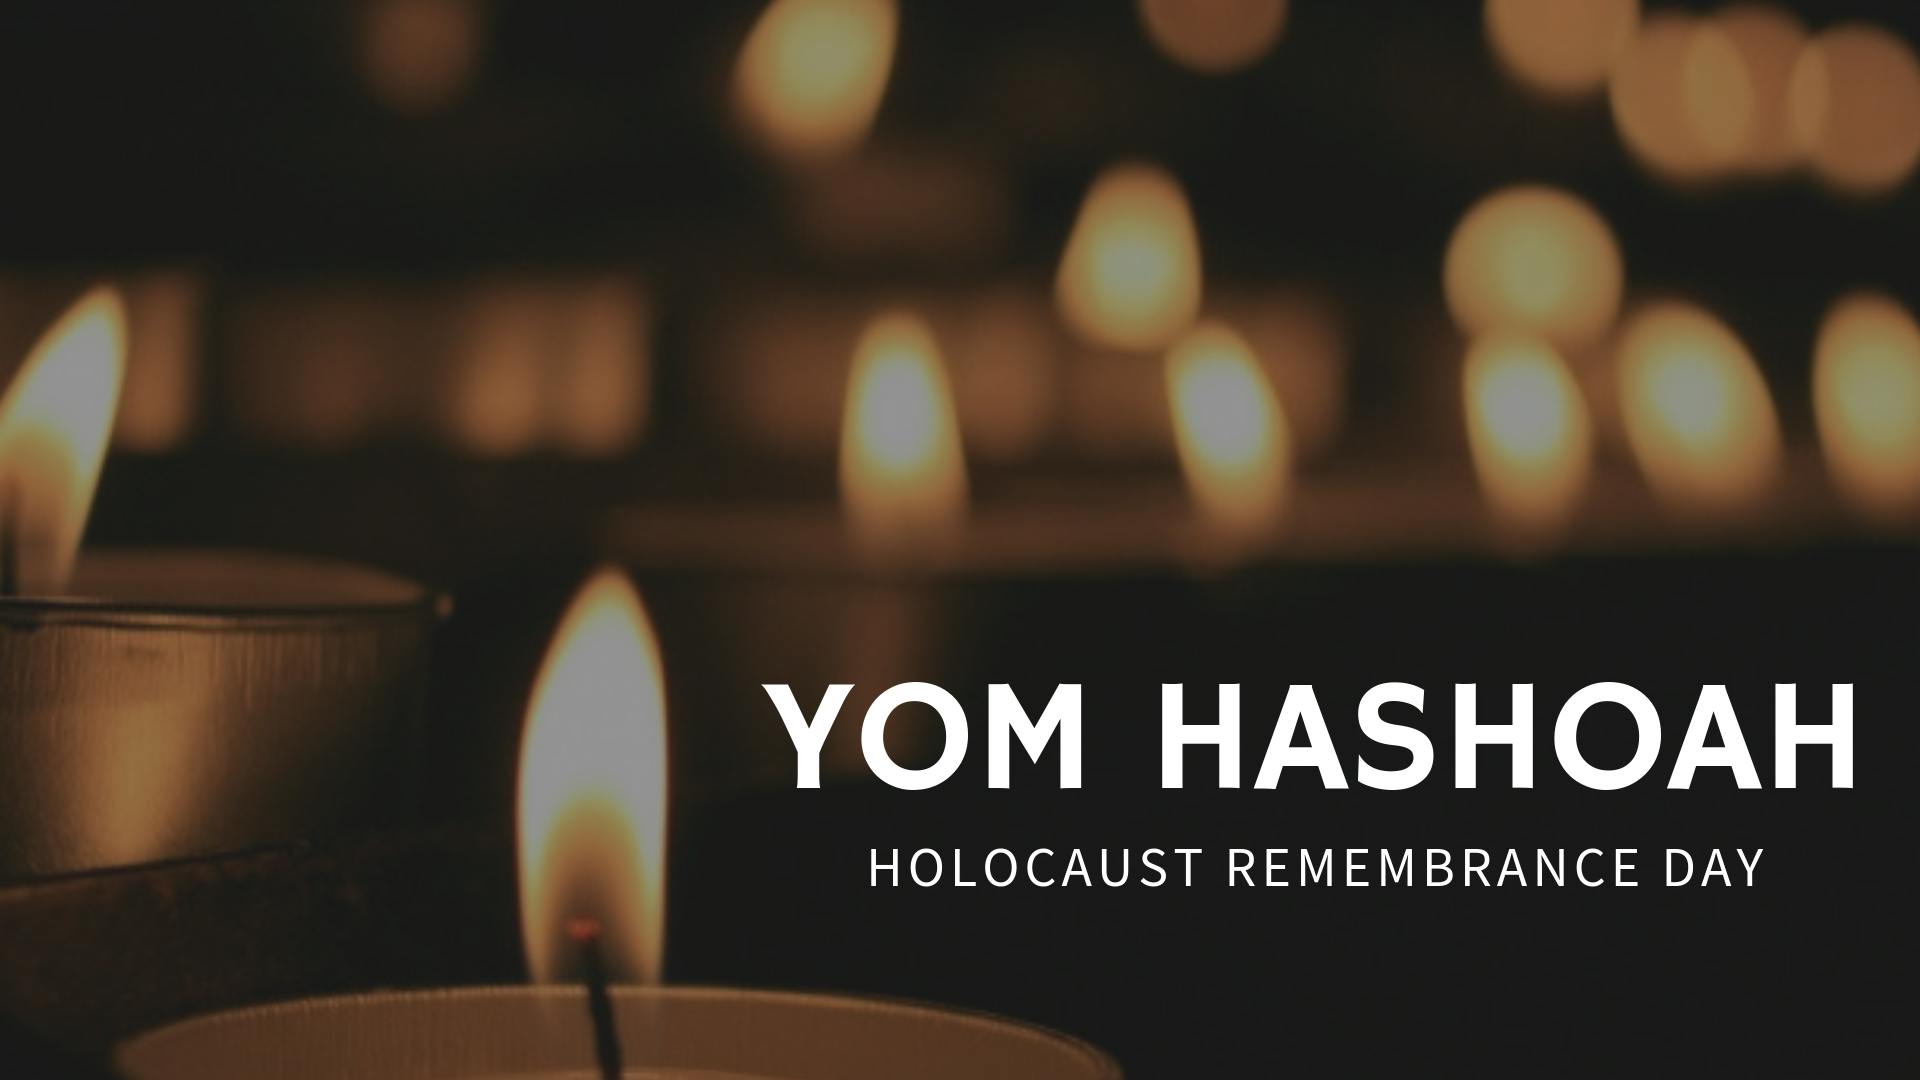 Yom Hashoah: Holocaust Remembrance Day